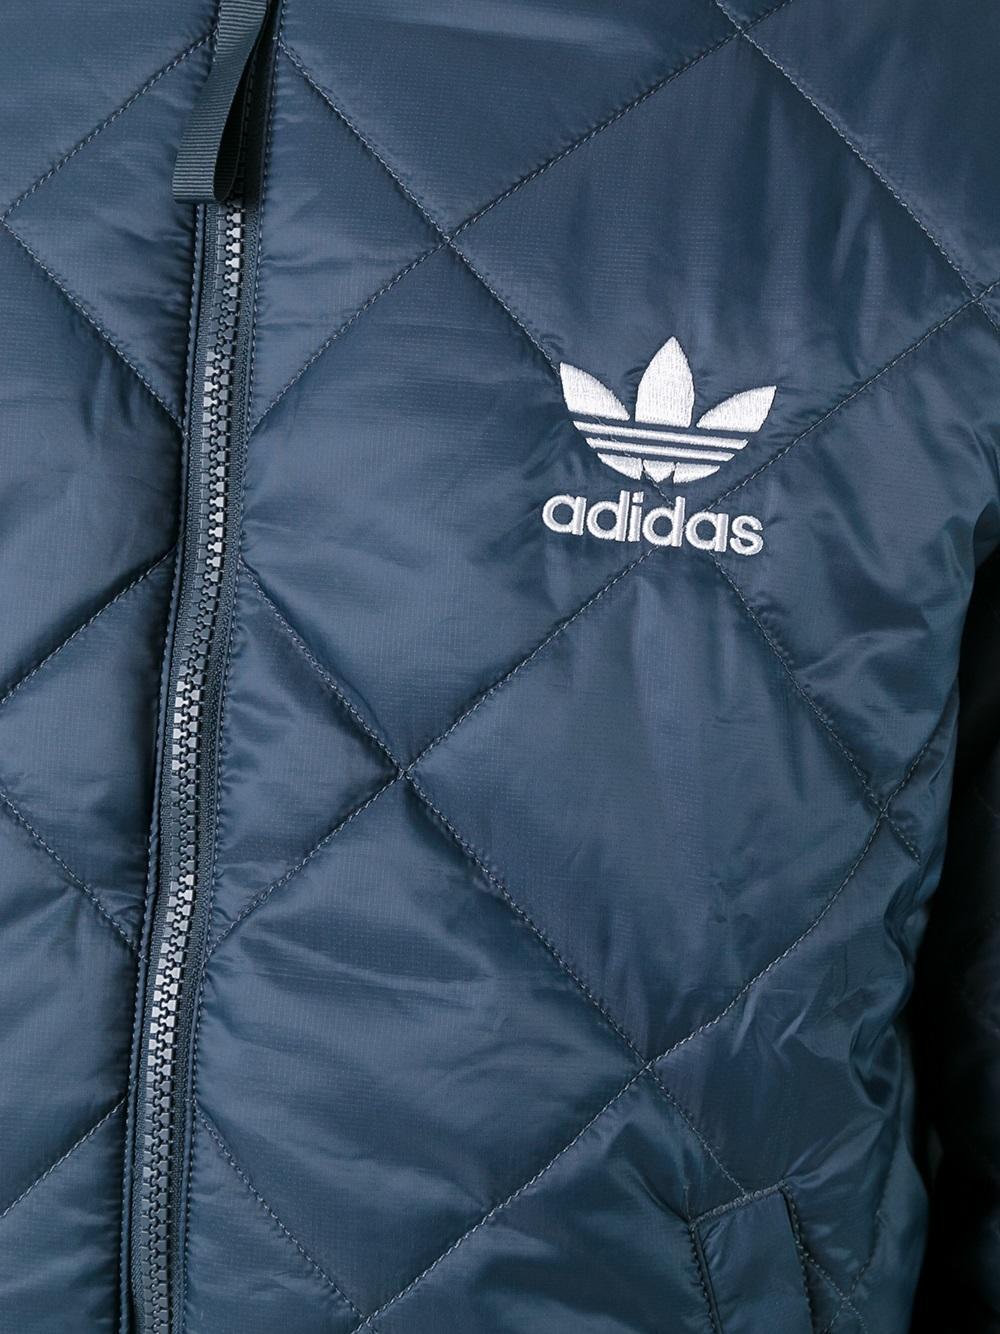 adidas Originals Men's Blue 'quilted Superstar' Bomber Jacket